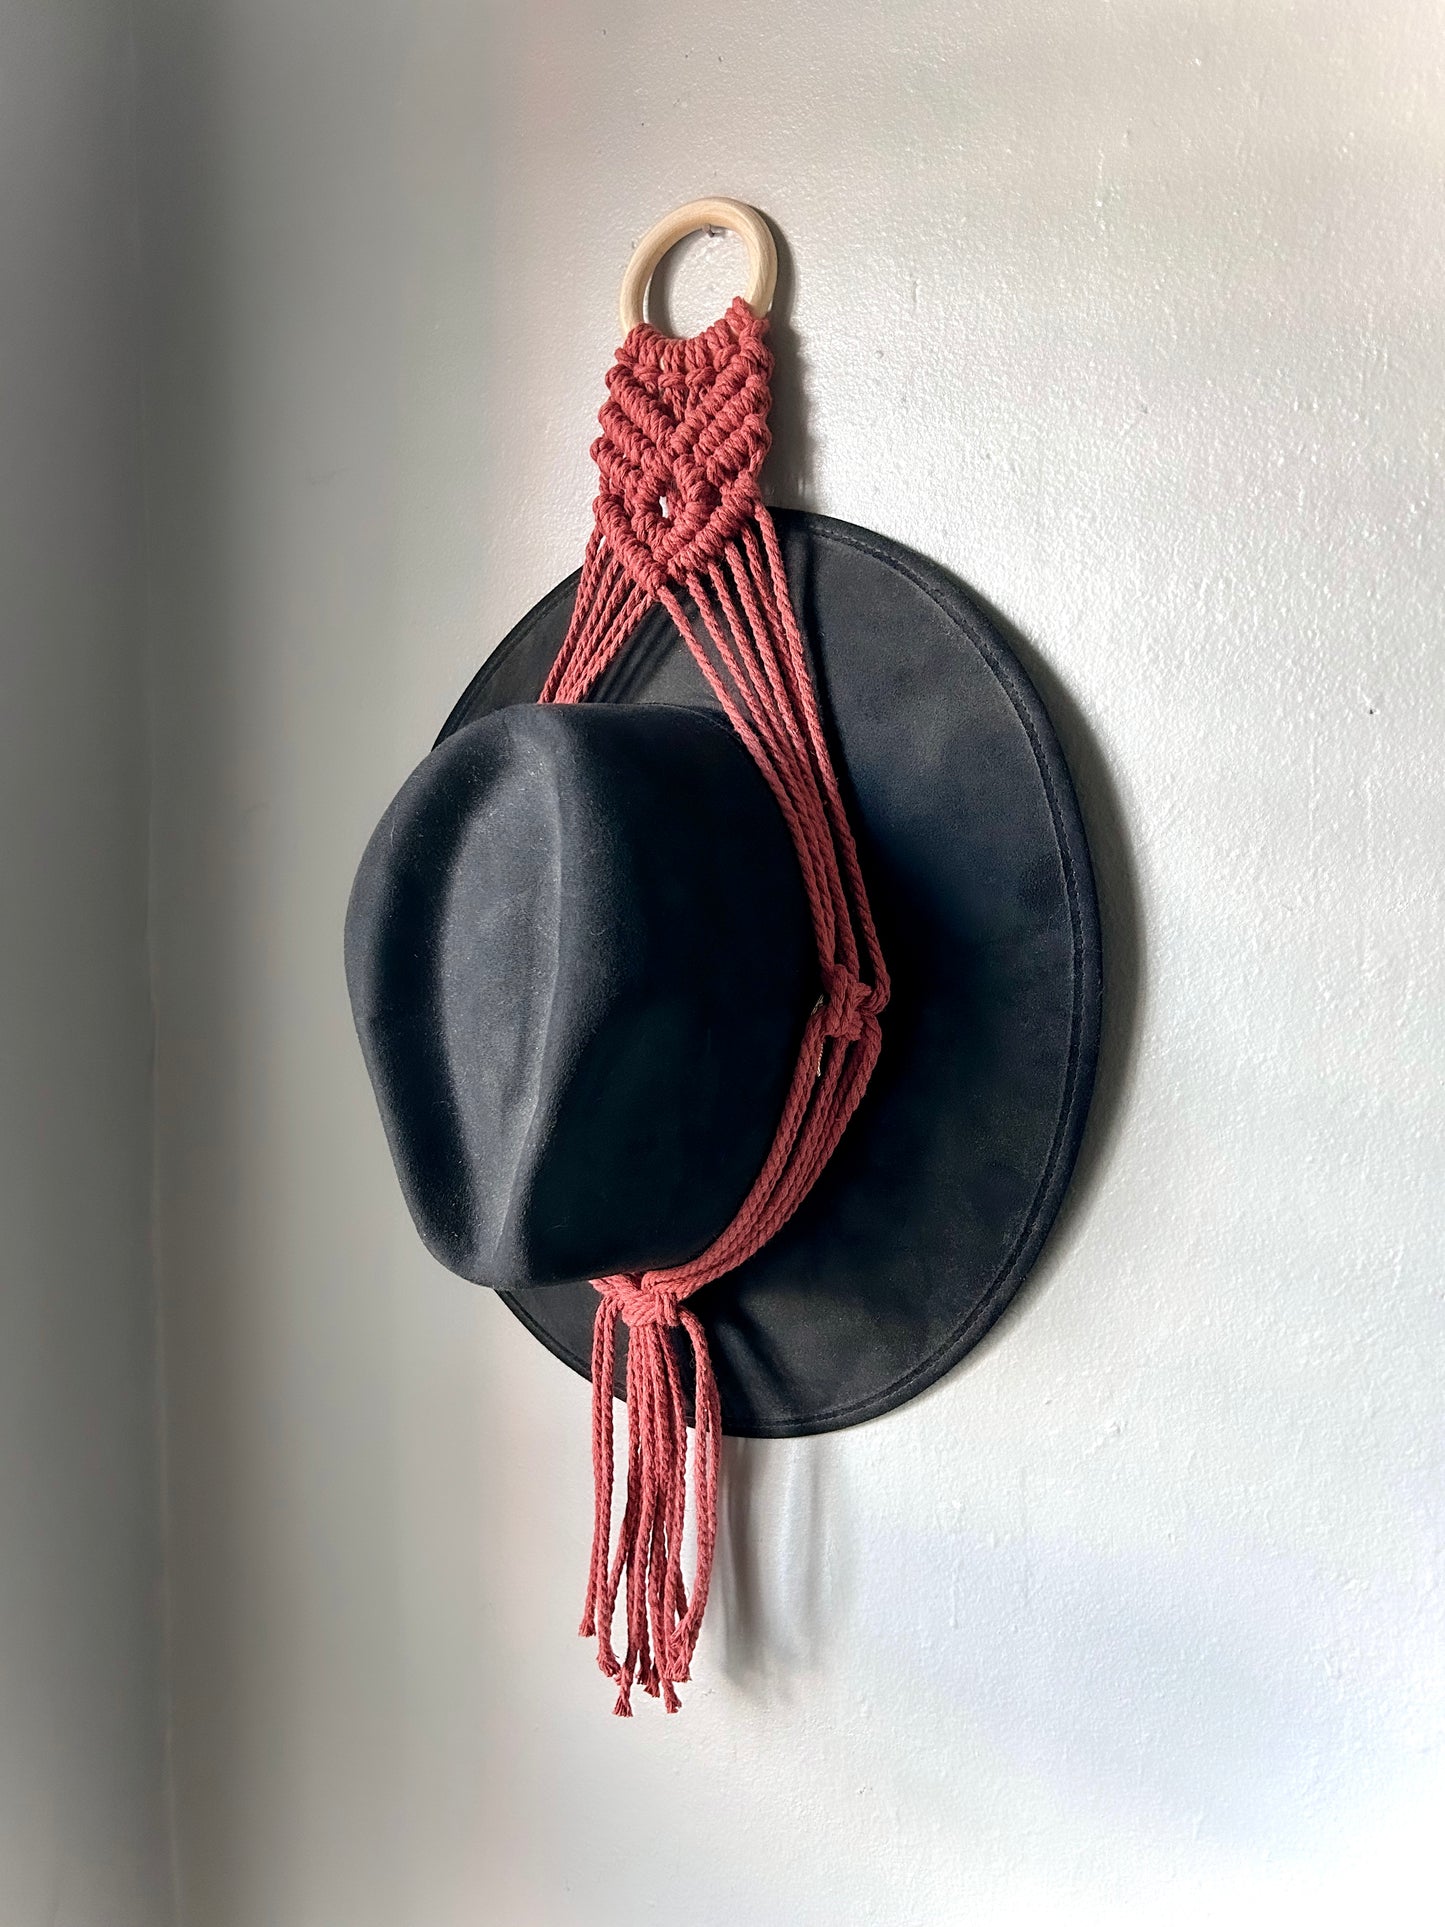 Colorful Macrame Hat Hanger